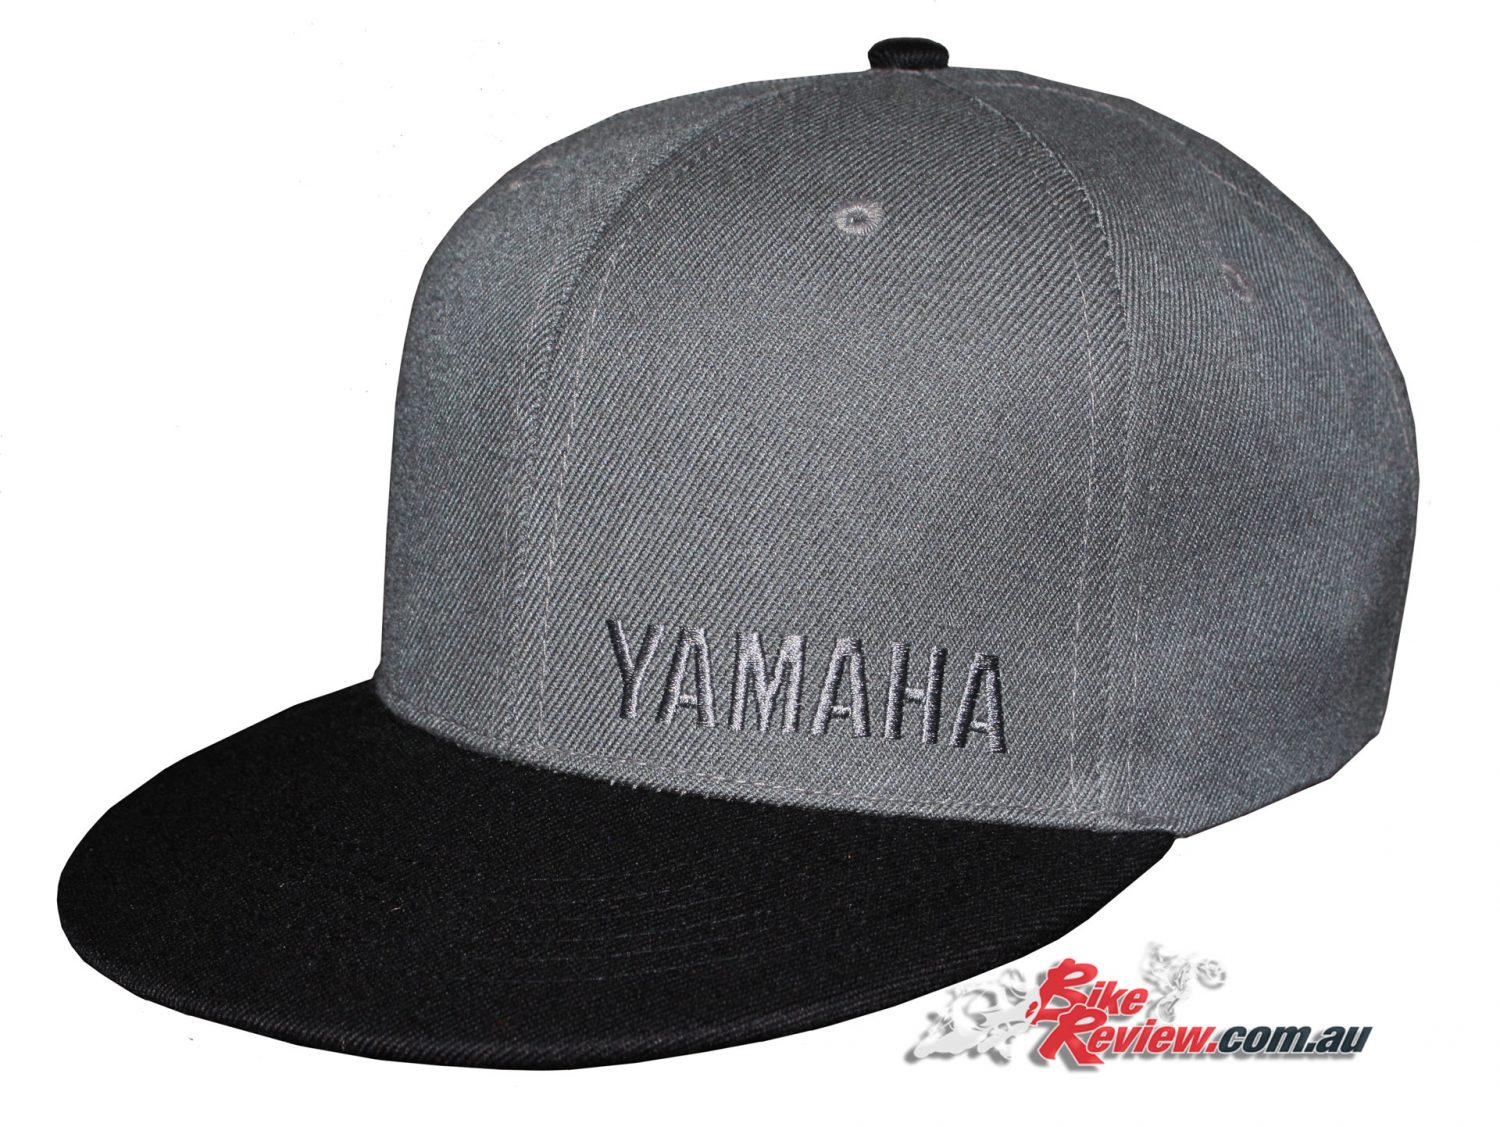 Yamaha Corporate Cap